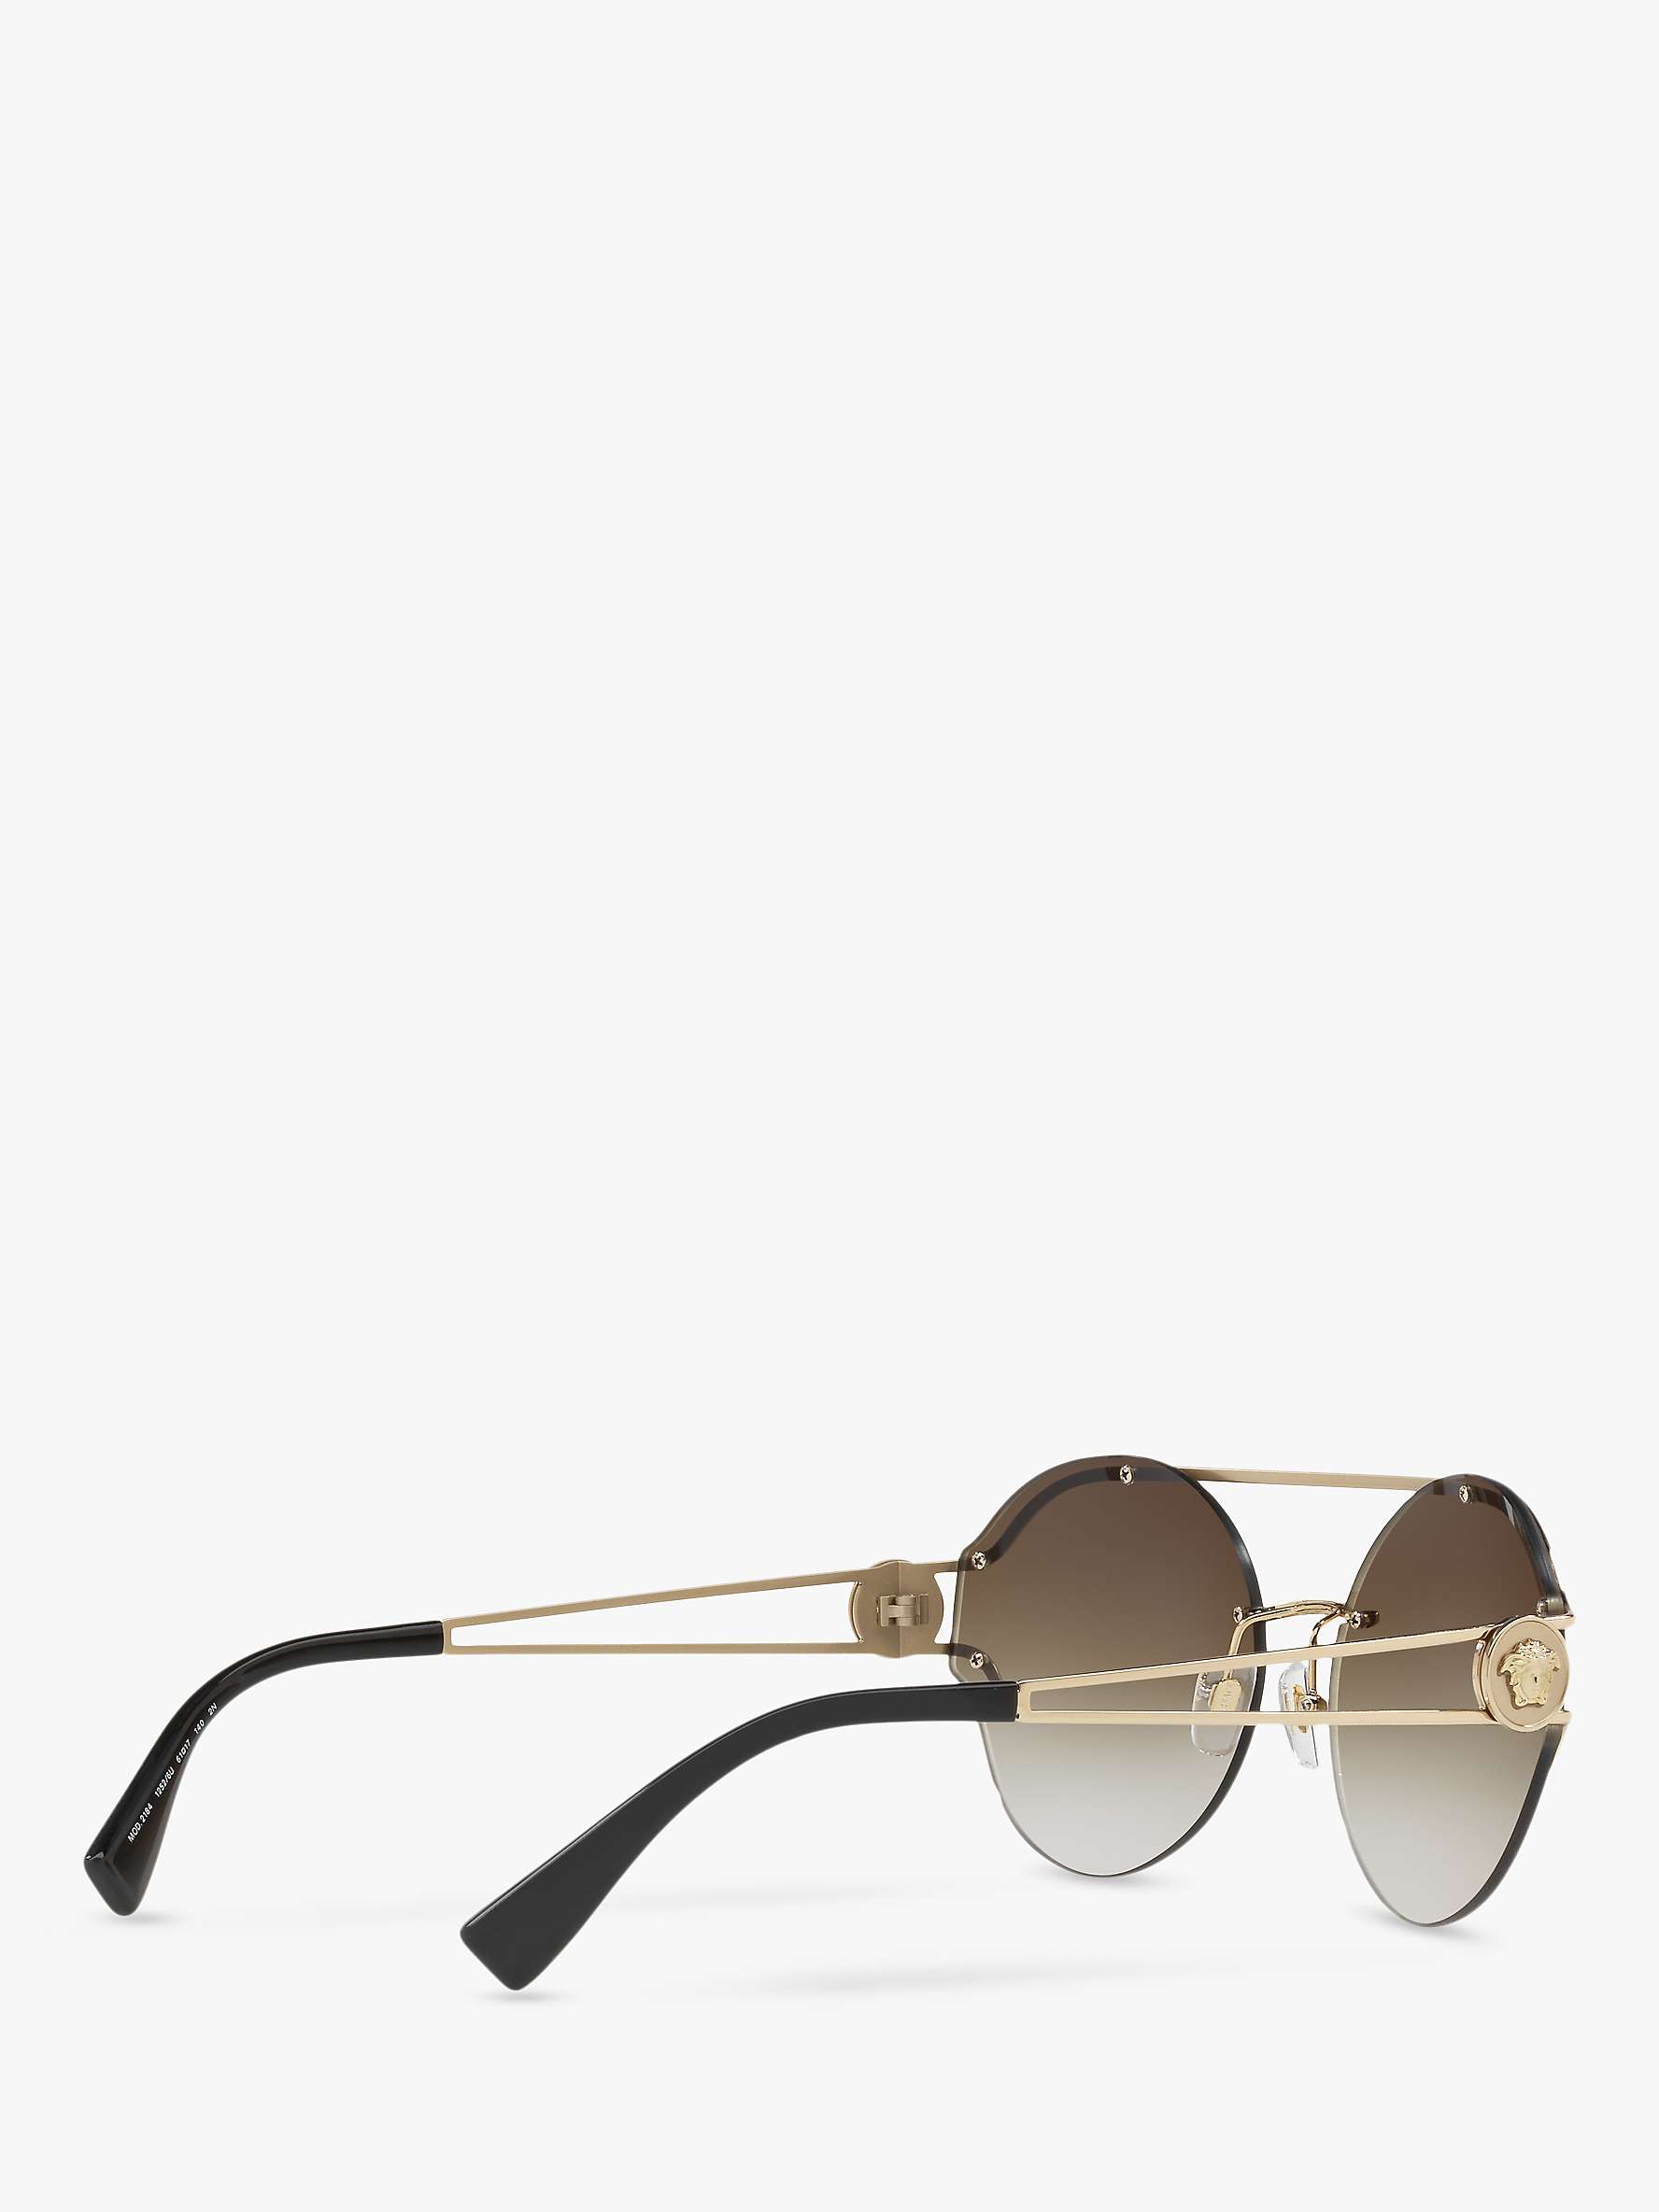 Versace VE2184 Women's Round Sunglasses, Gold/Mirror Gold at John Lewis ...